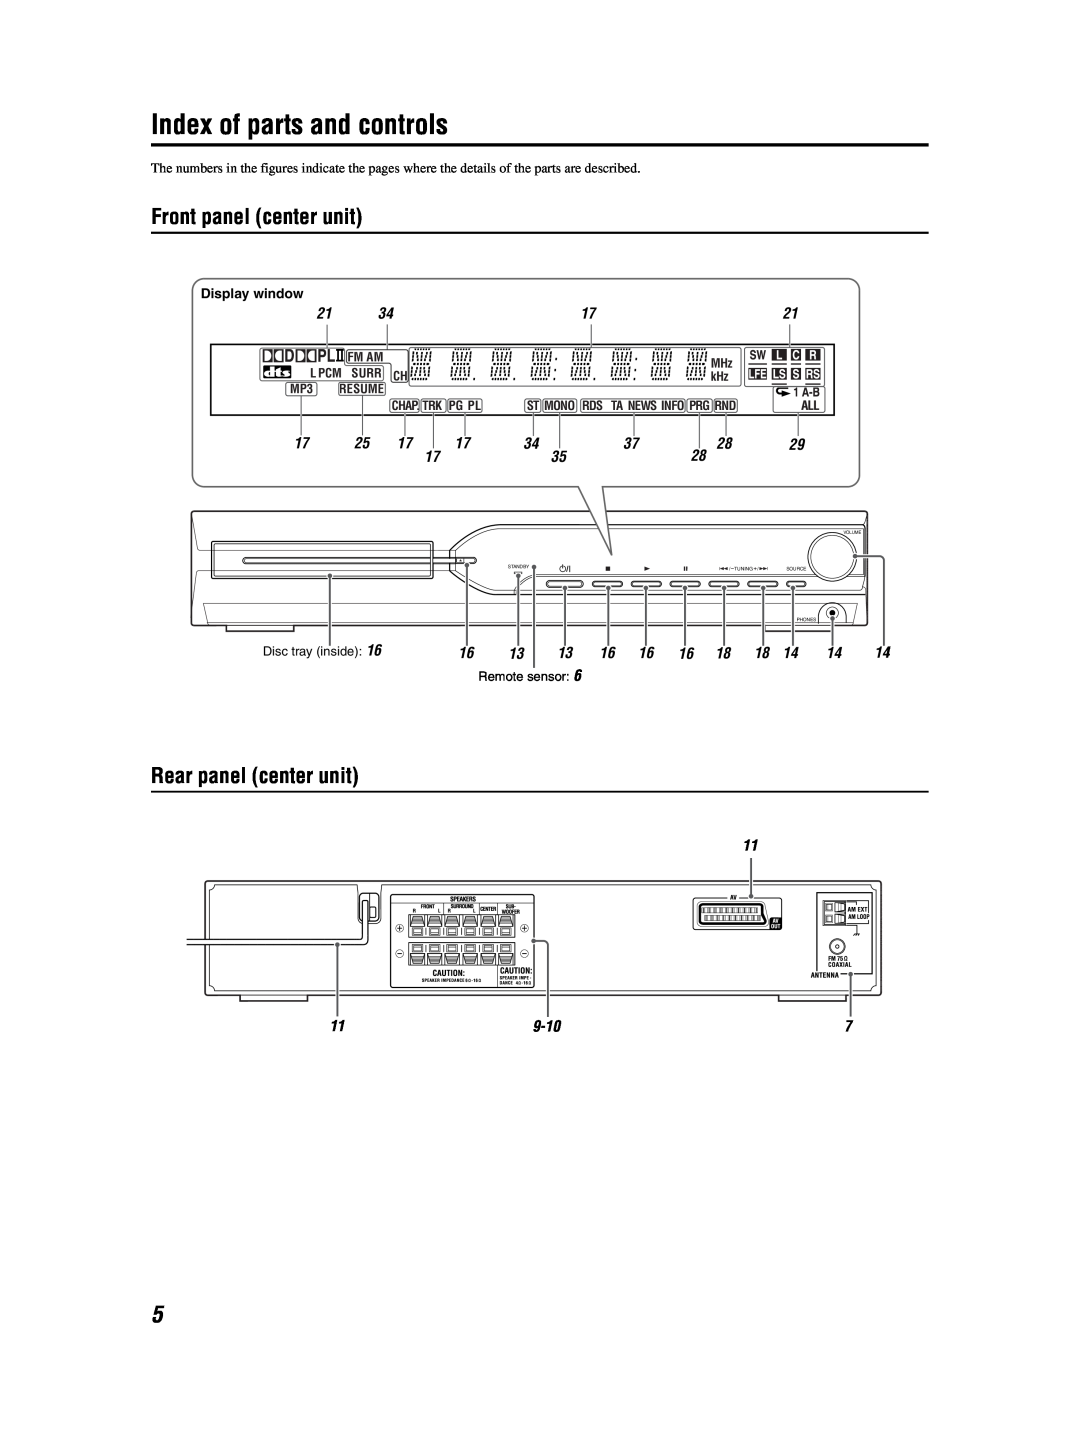 JVC GVT0155-001A manual Index of parts and controls, Front panel center unit, Rear panel center unit 